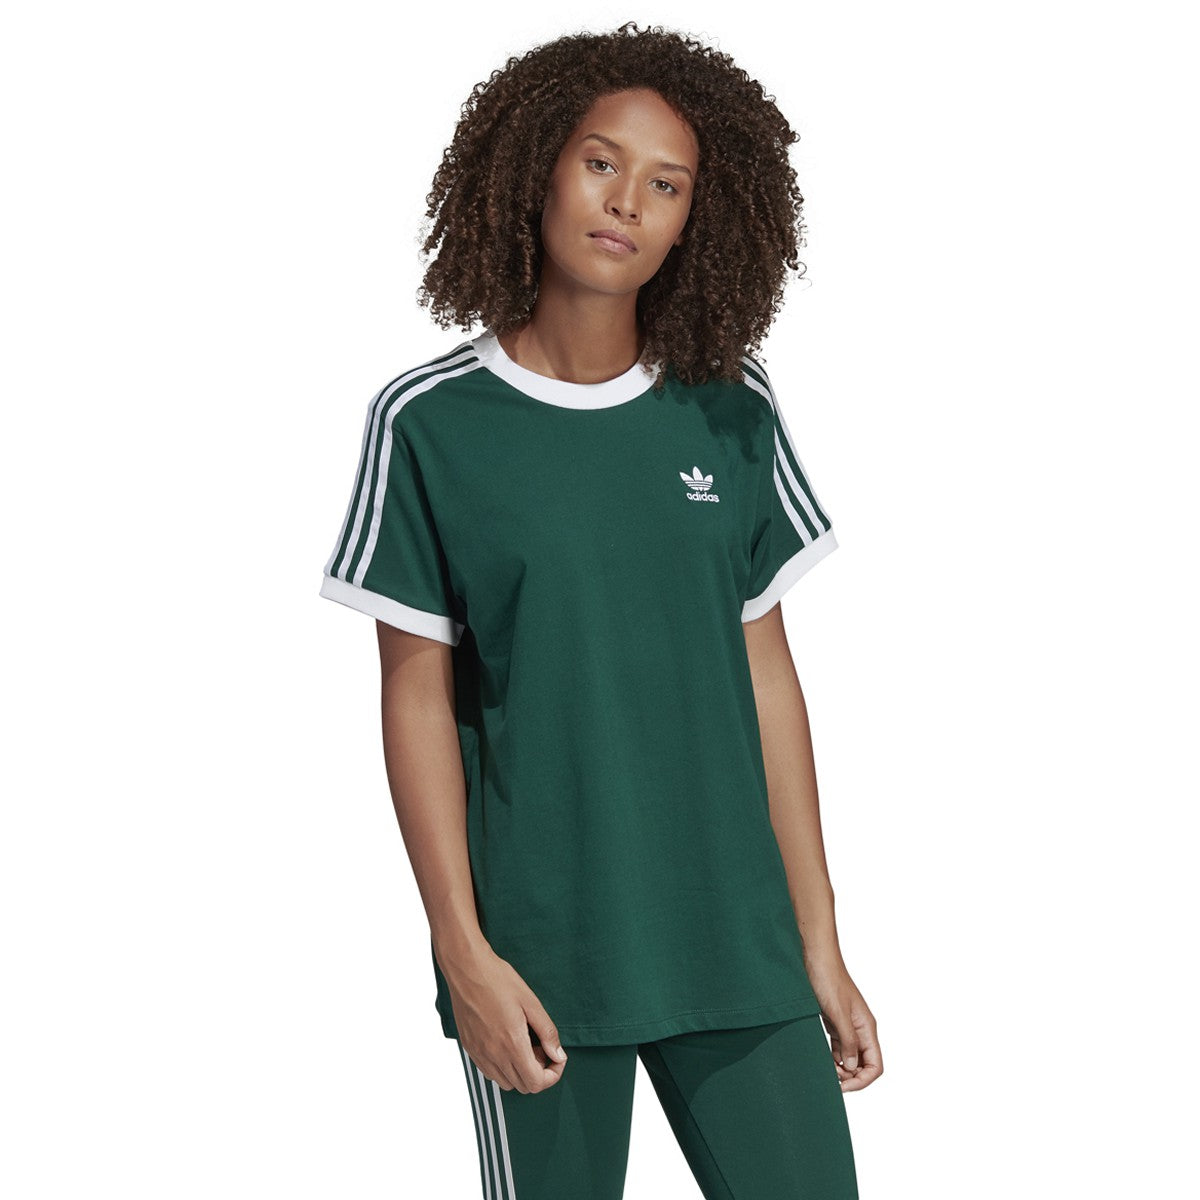 Beginner Bedrijf Mineraalwater Adidas Women's 3 Stripes Tee Collegiate Green